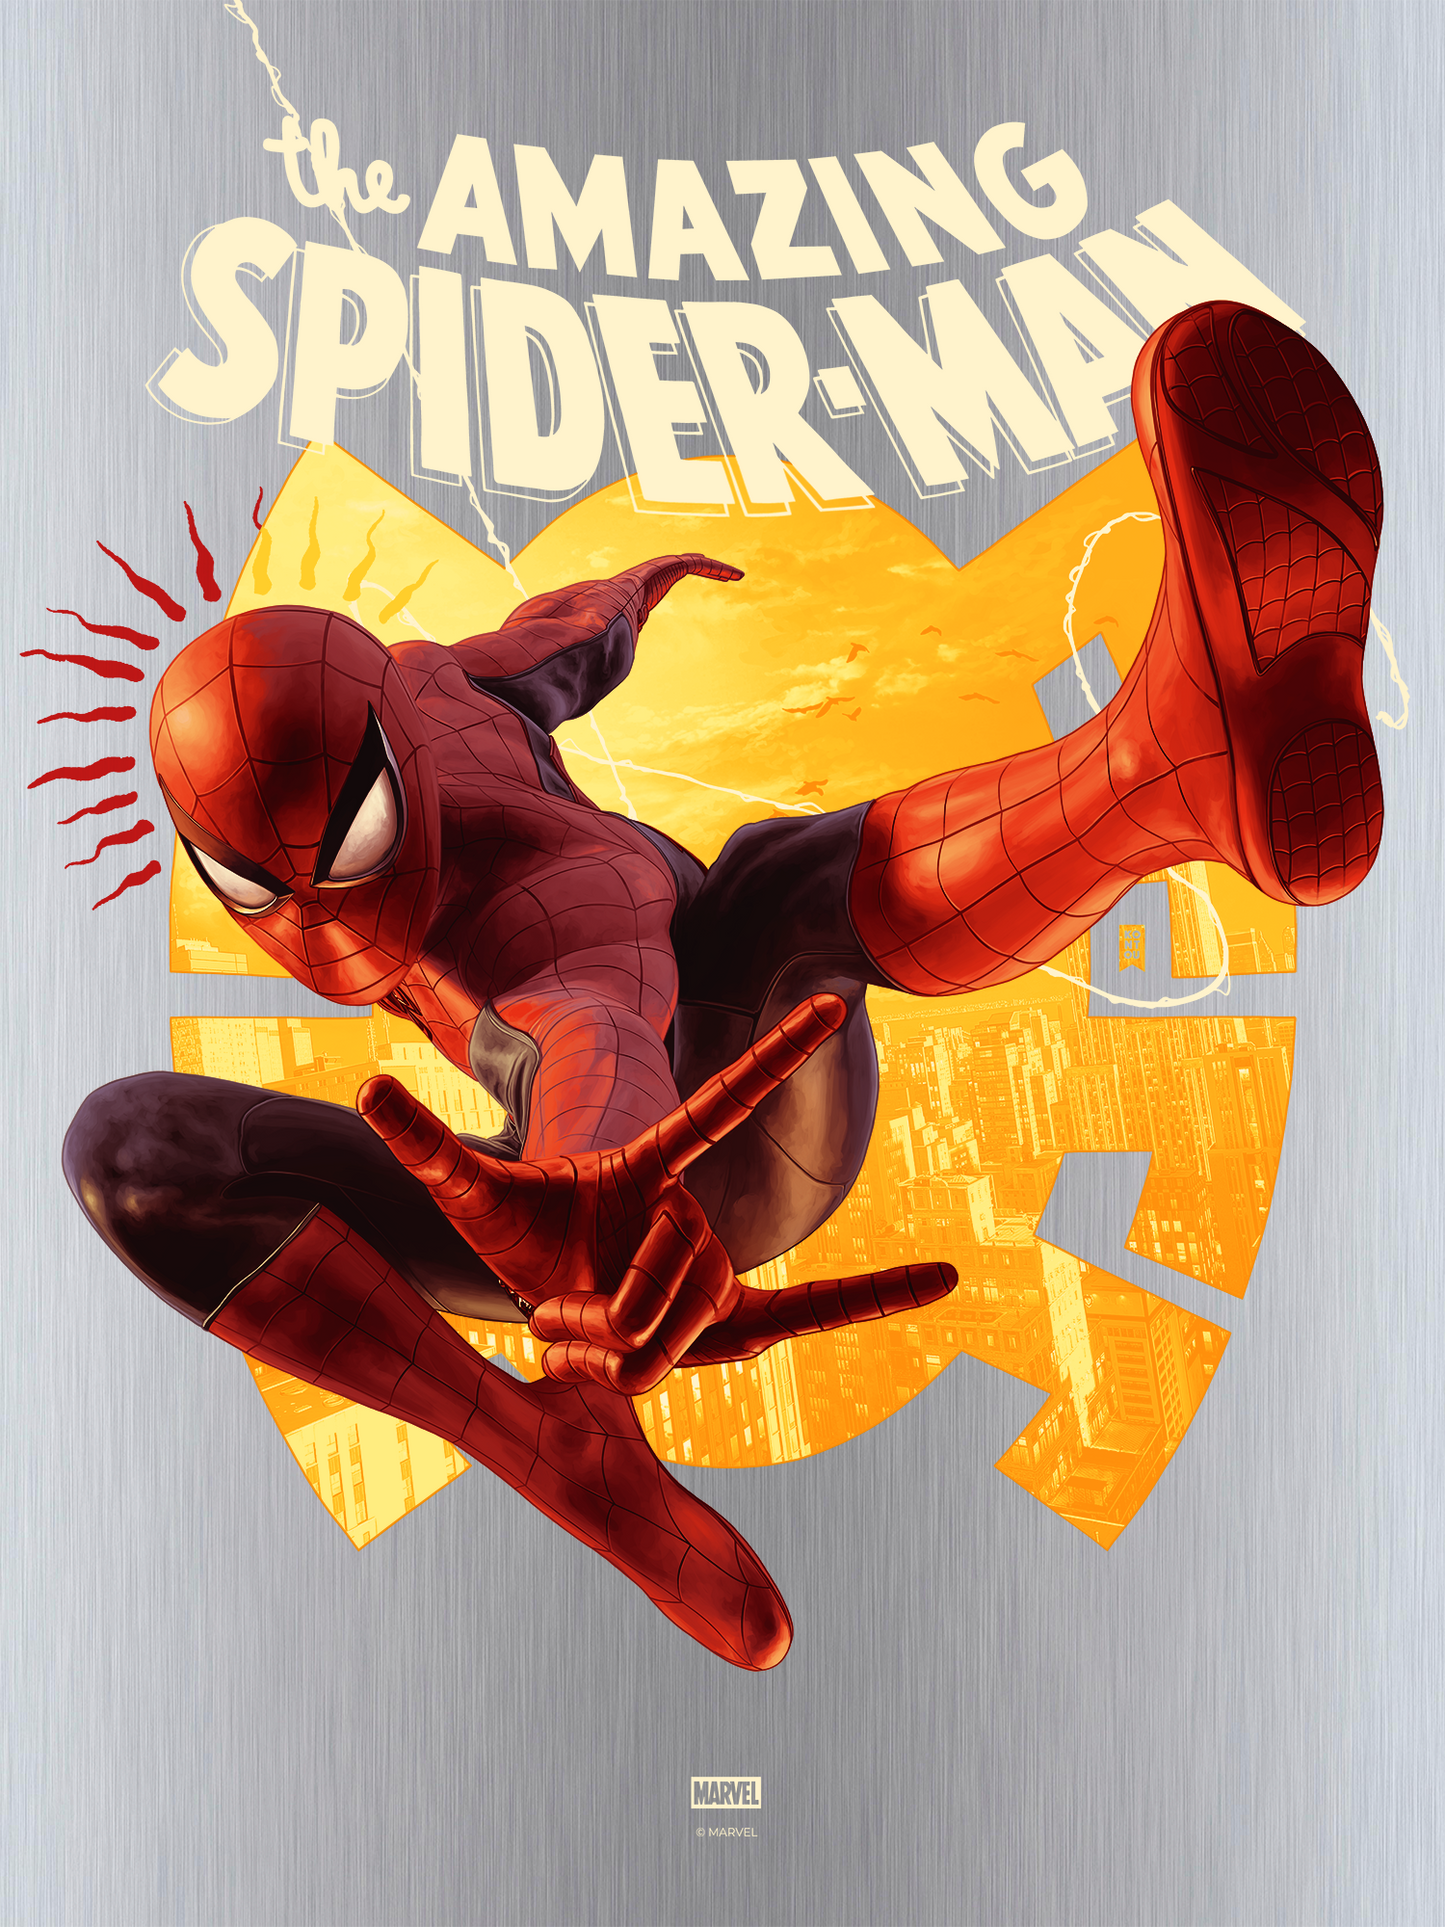 Jake Kontou "The Amazing Spider-Man" Aluminum Print